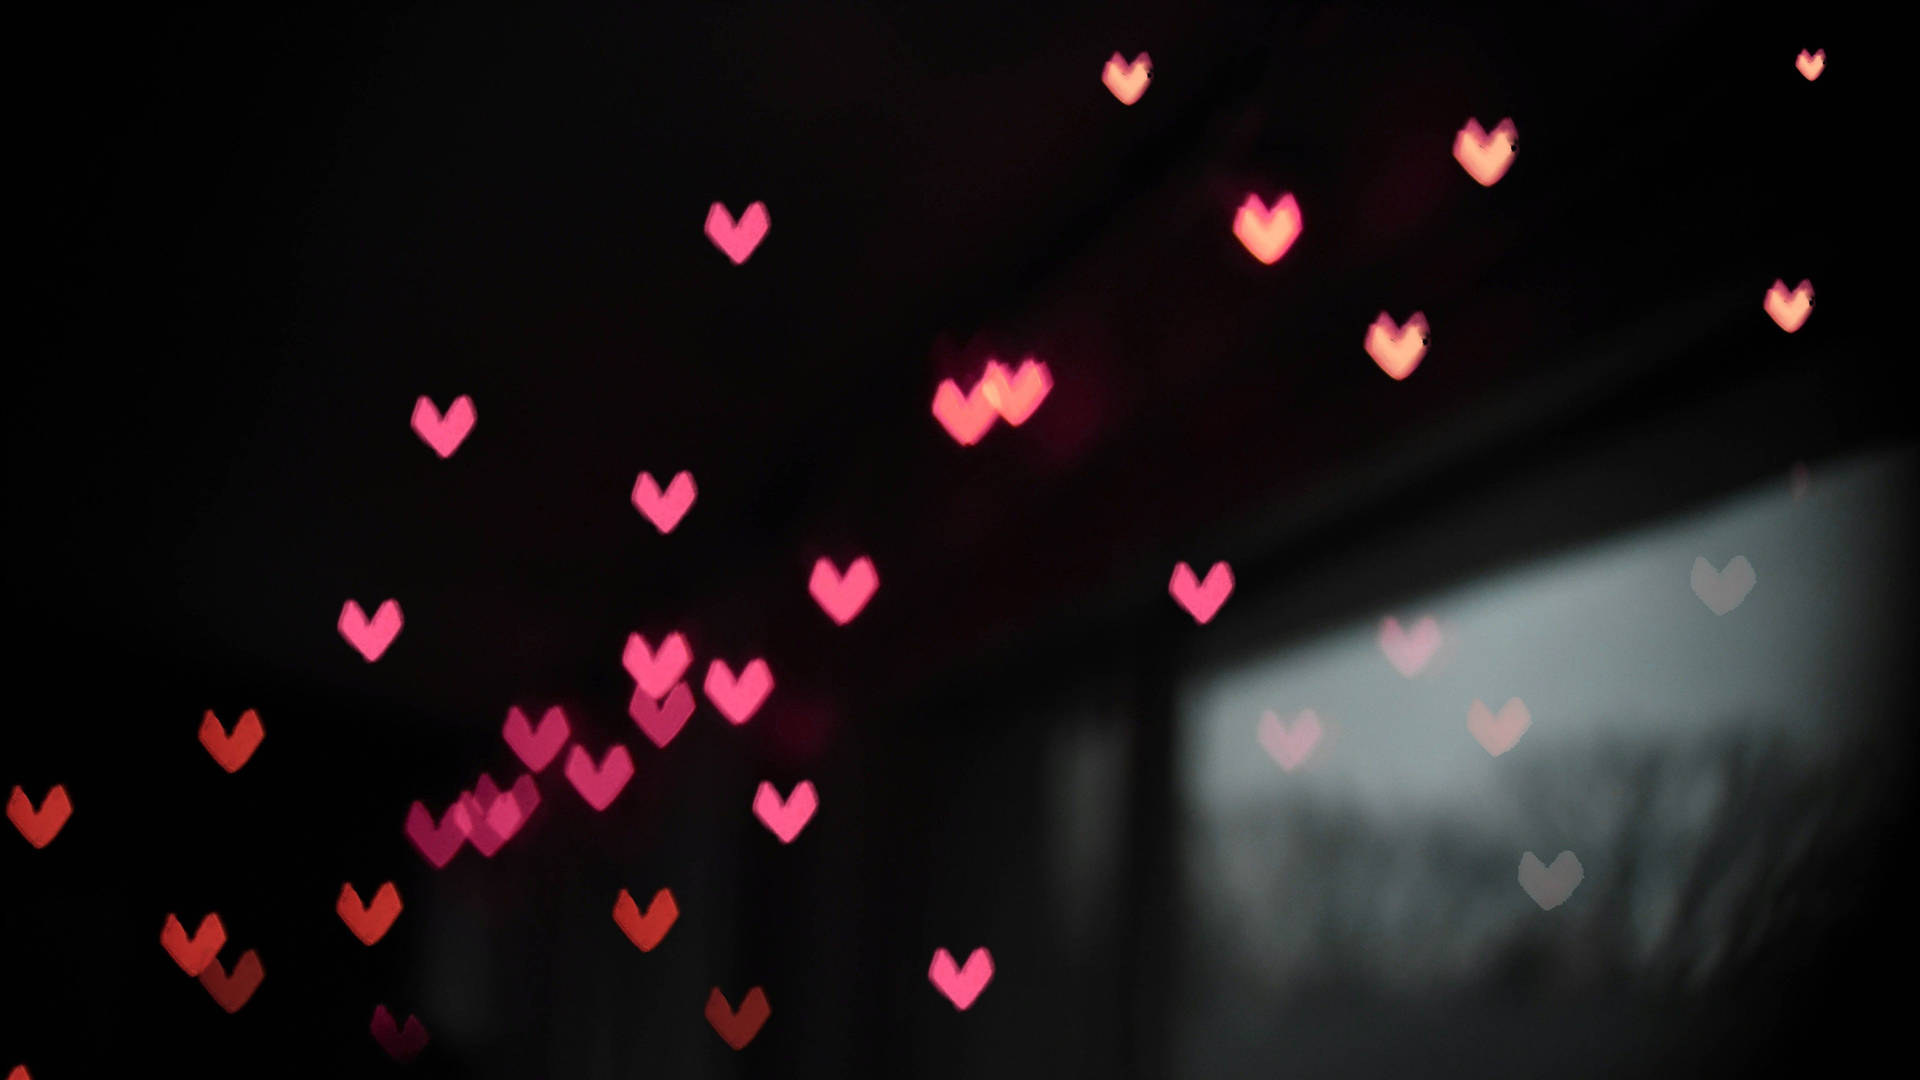 Dark Heart Image Of Pink Hearts